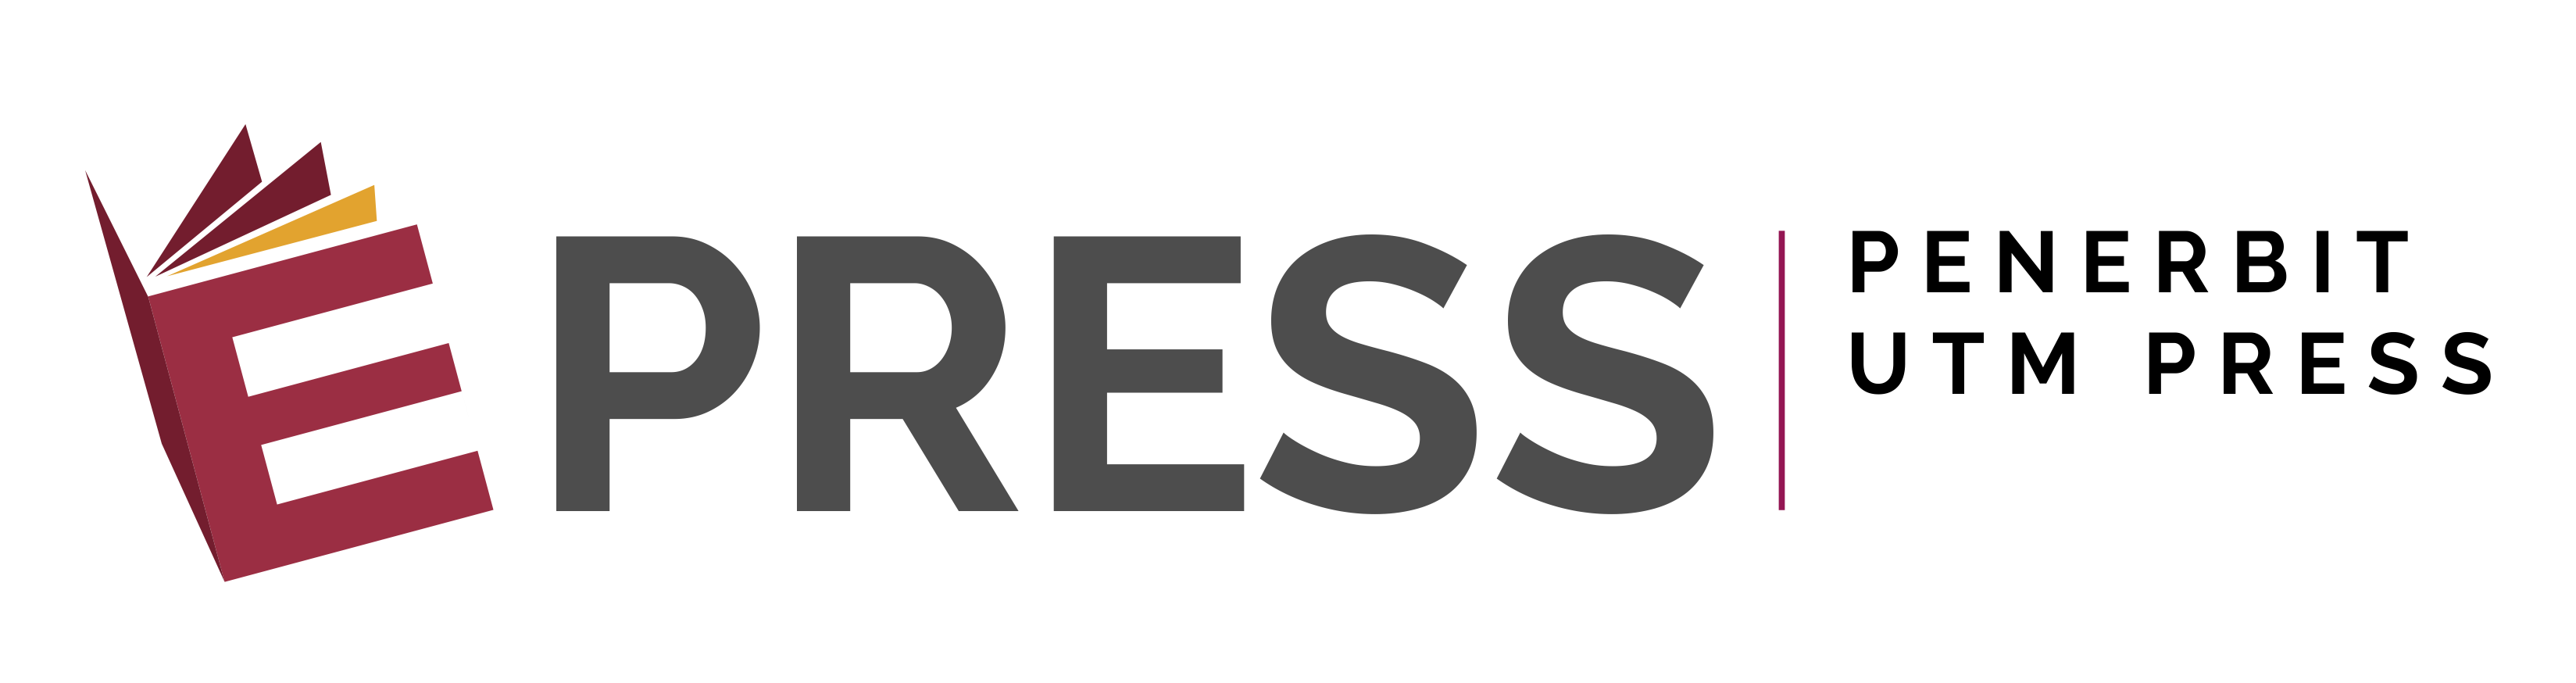 Logo Epress Default